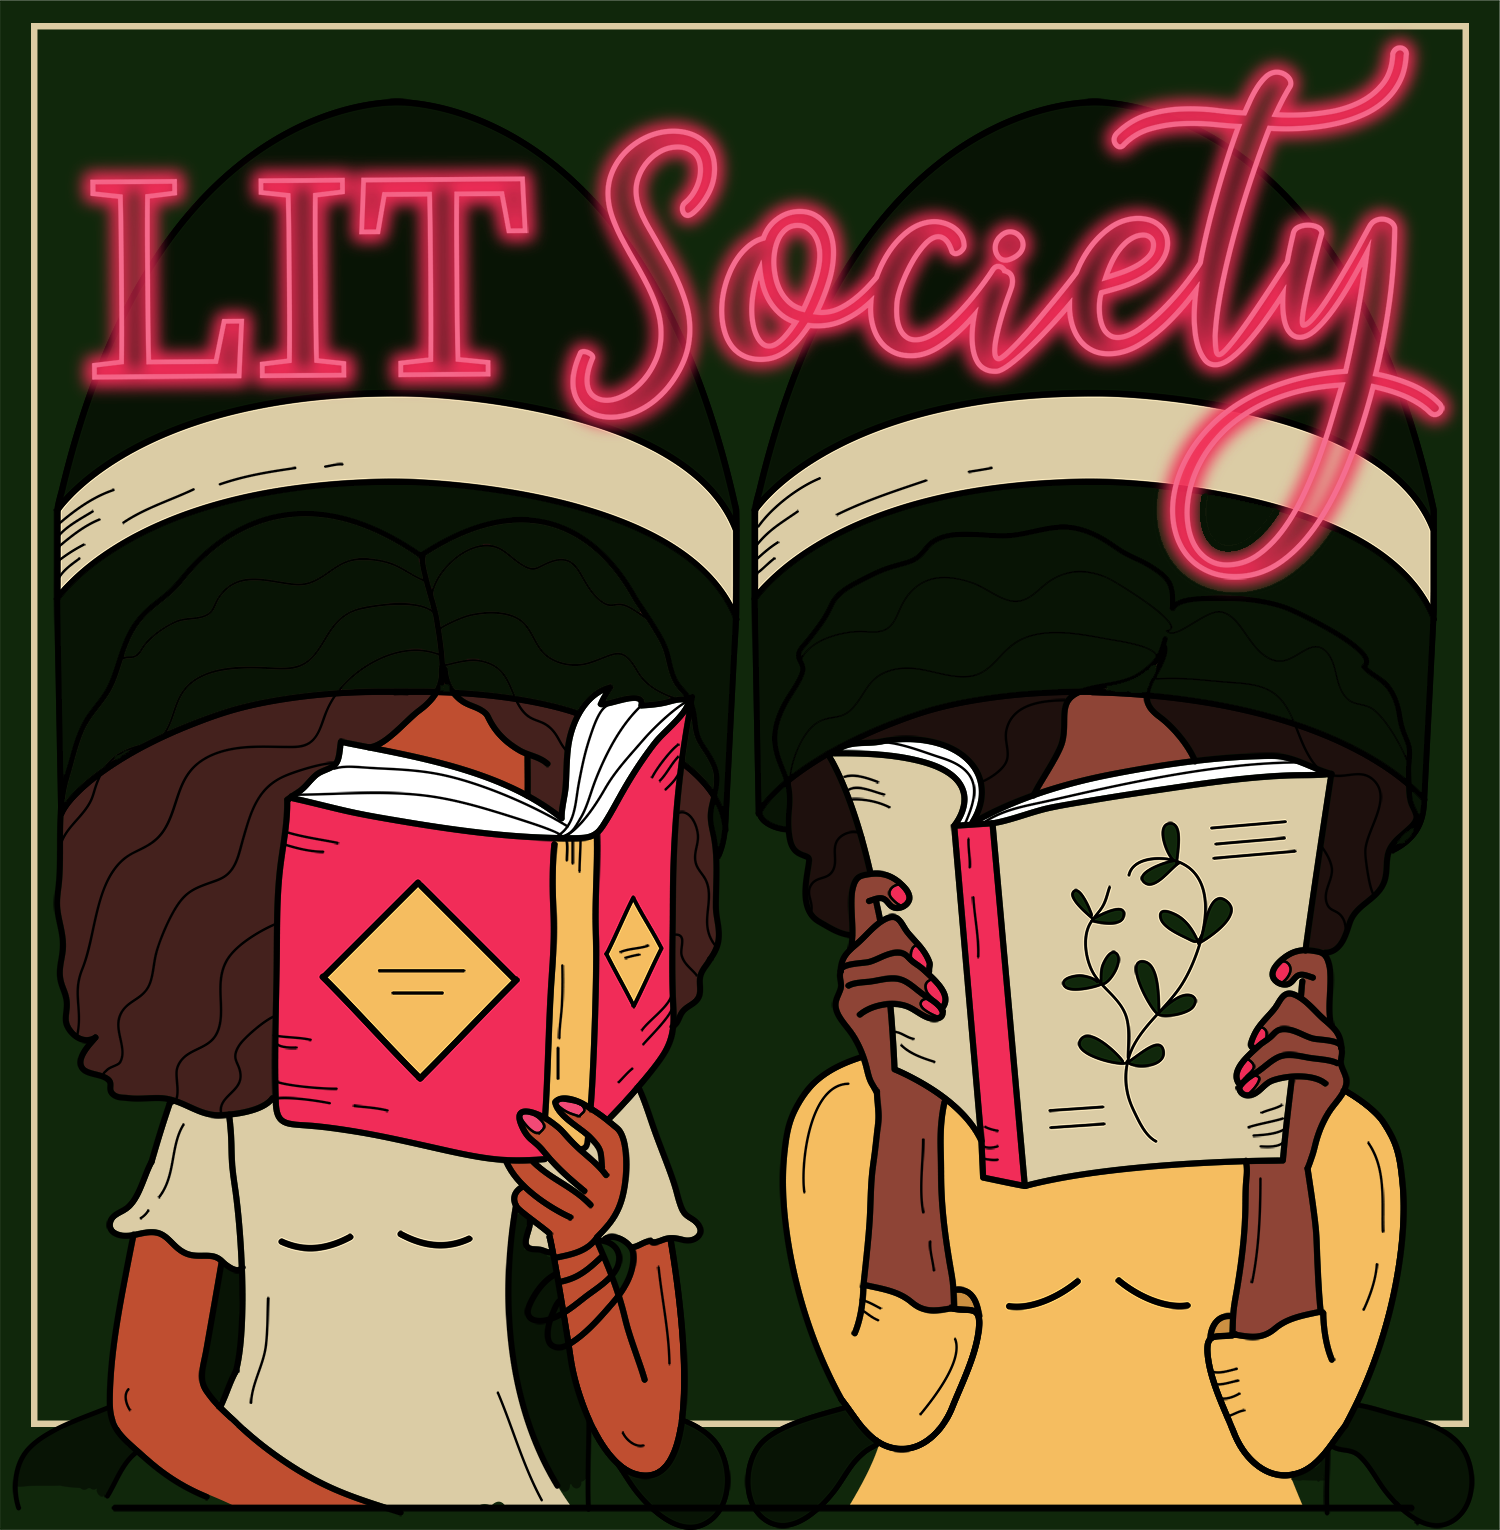 Lit Society: Books and Drama